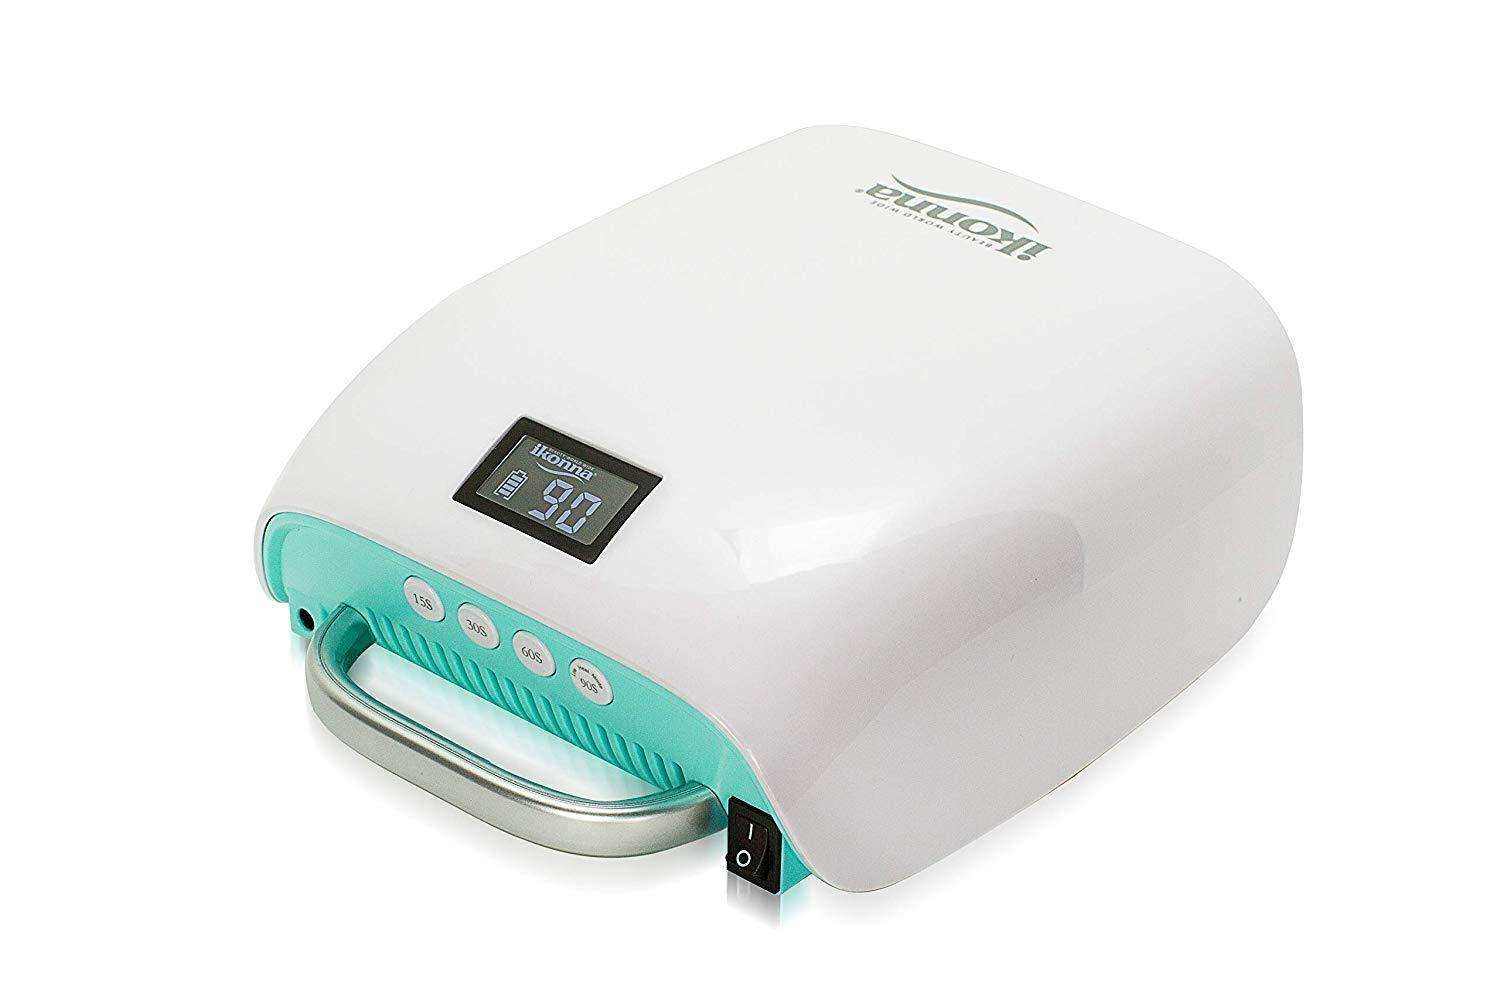 iKonna Portable UV/LED Lamp 48W - White